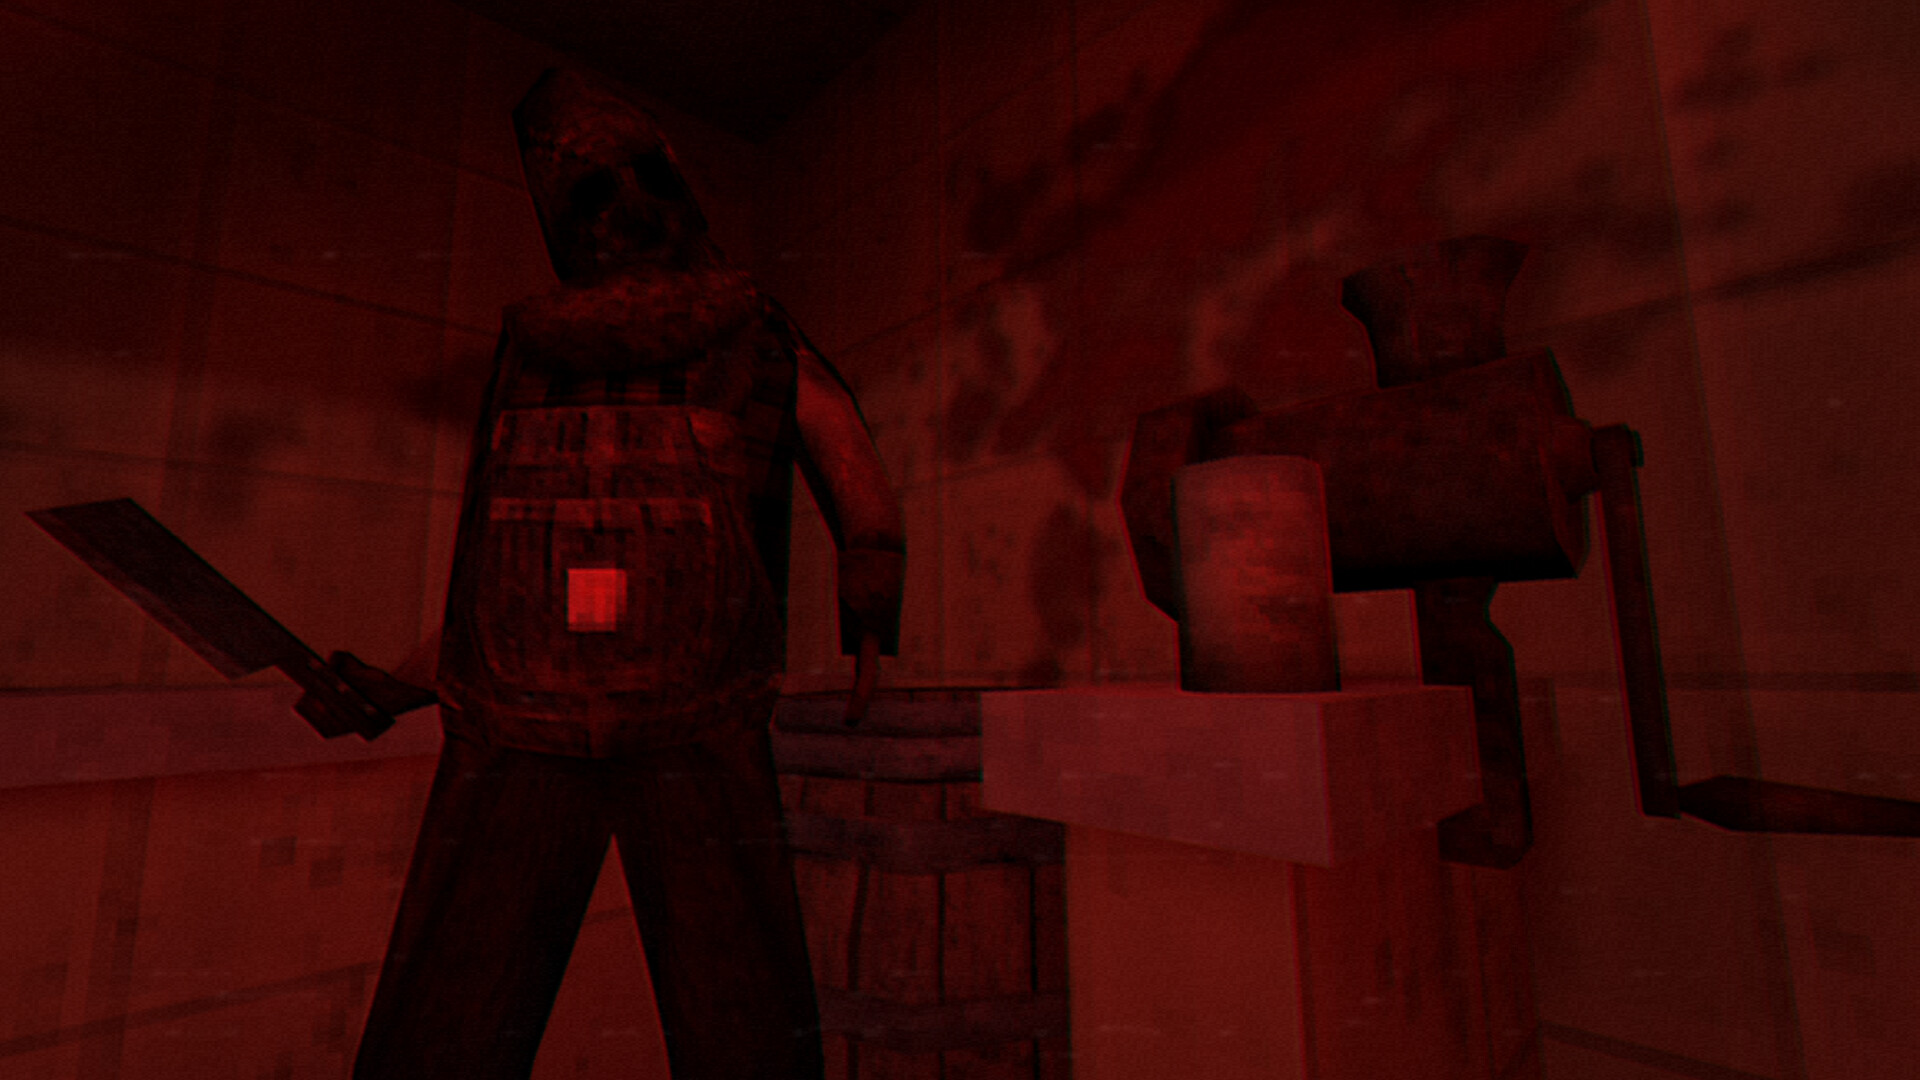 Horrorspiel Cannibal Abduction angekündigt Screenshots Bilder